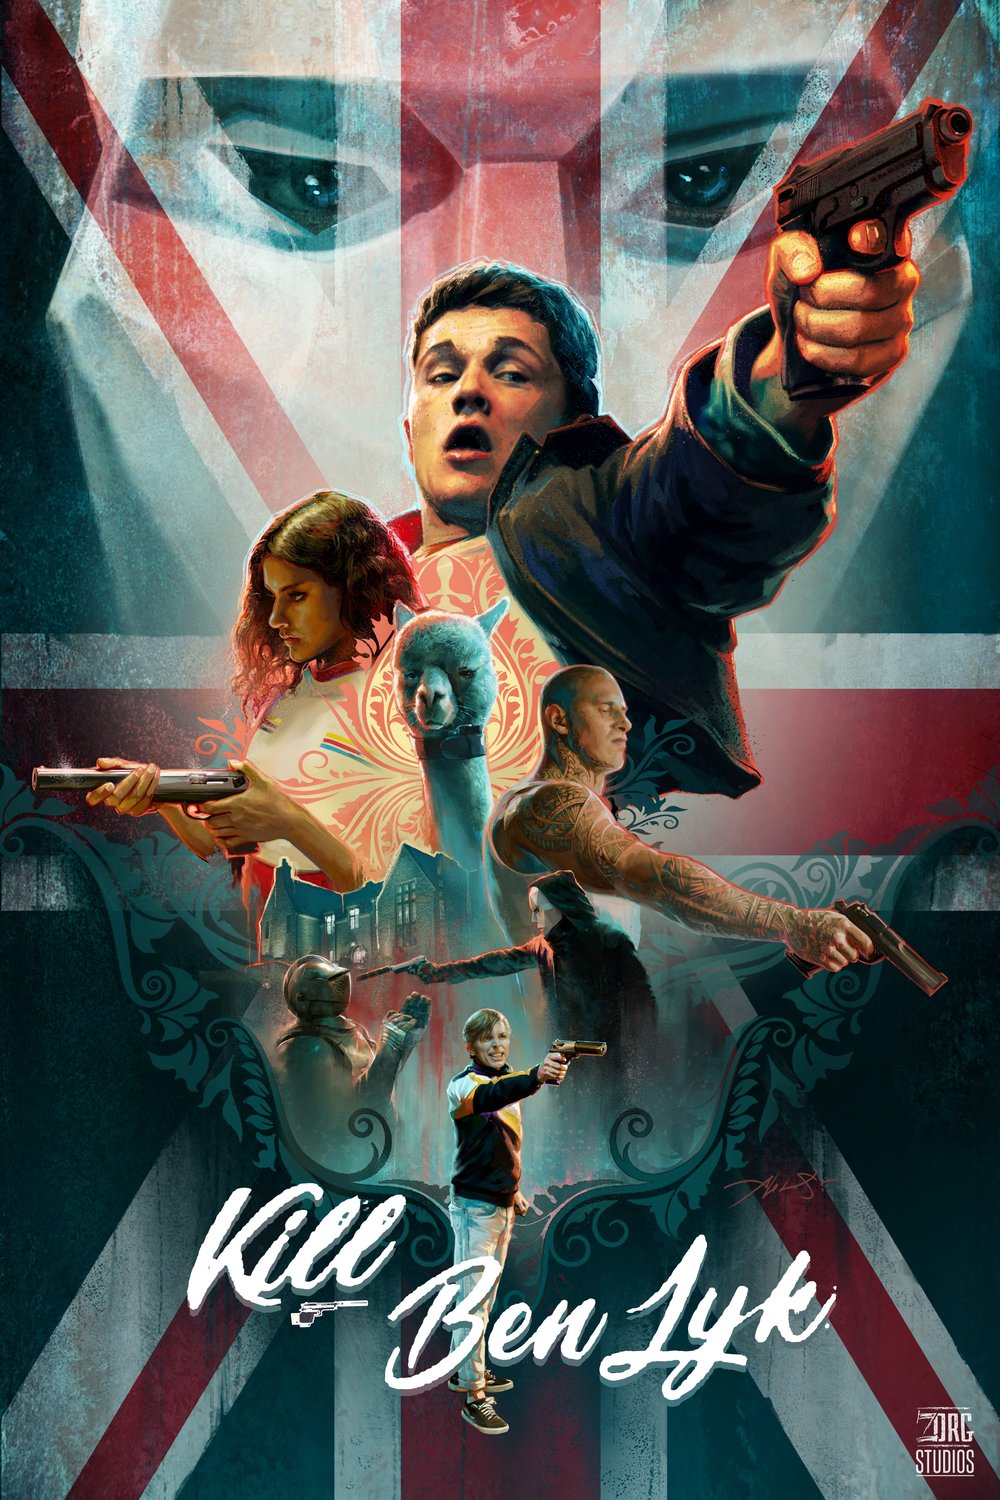 L'affiche du film Kill Ben Lyk